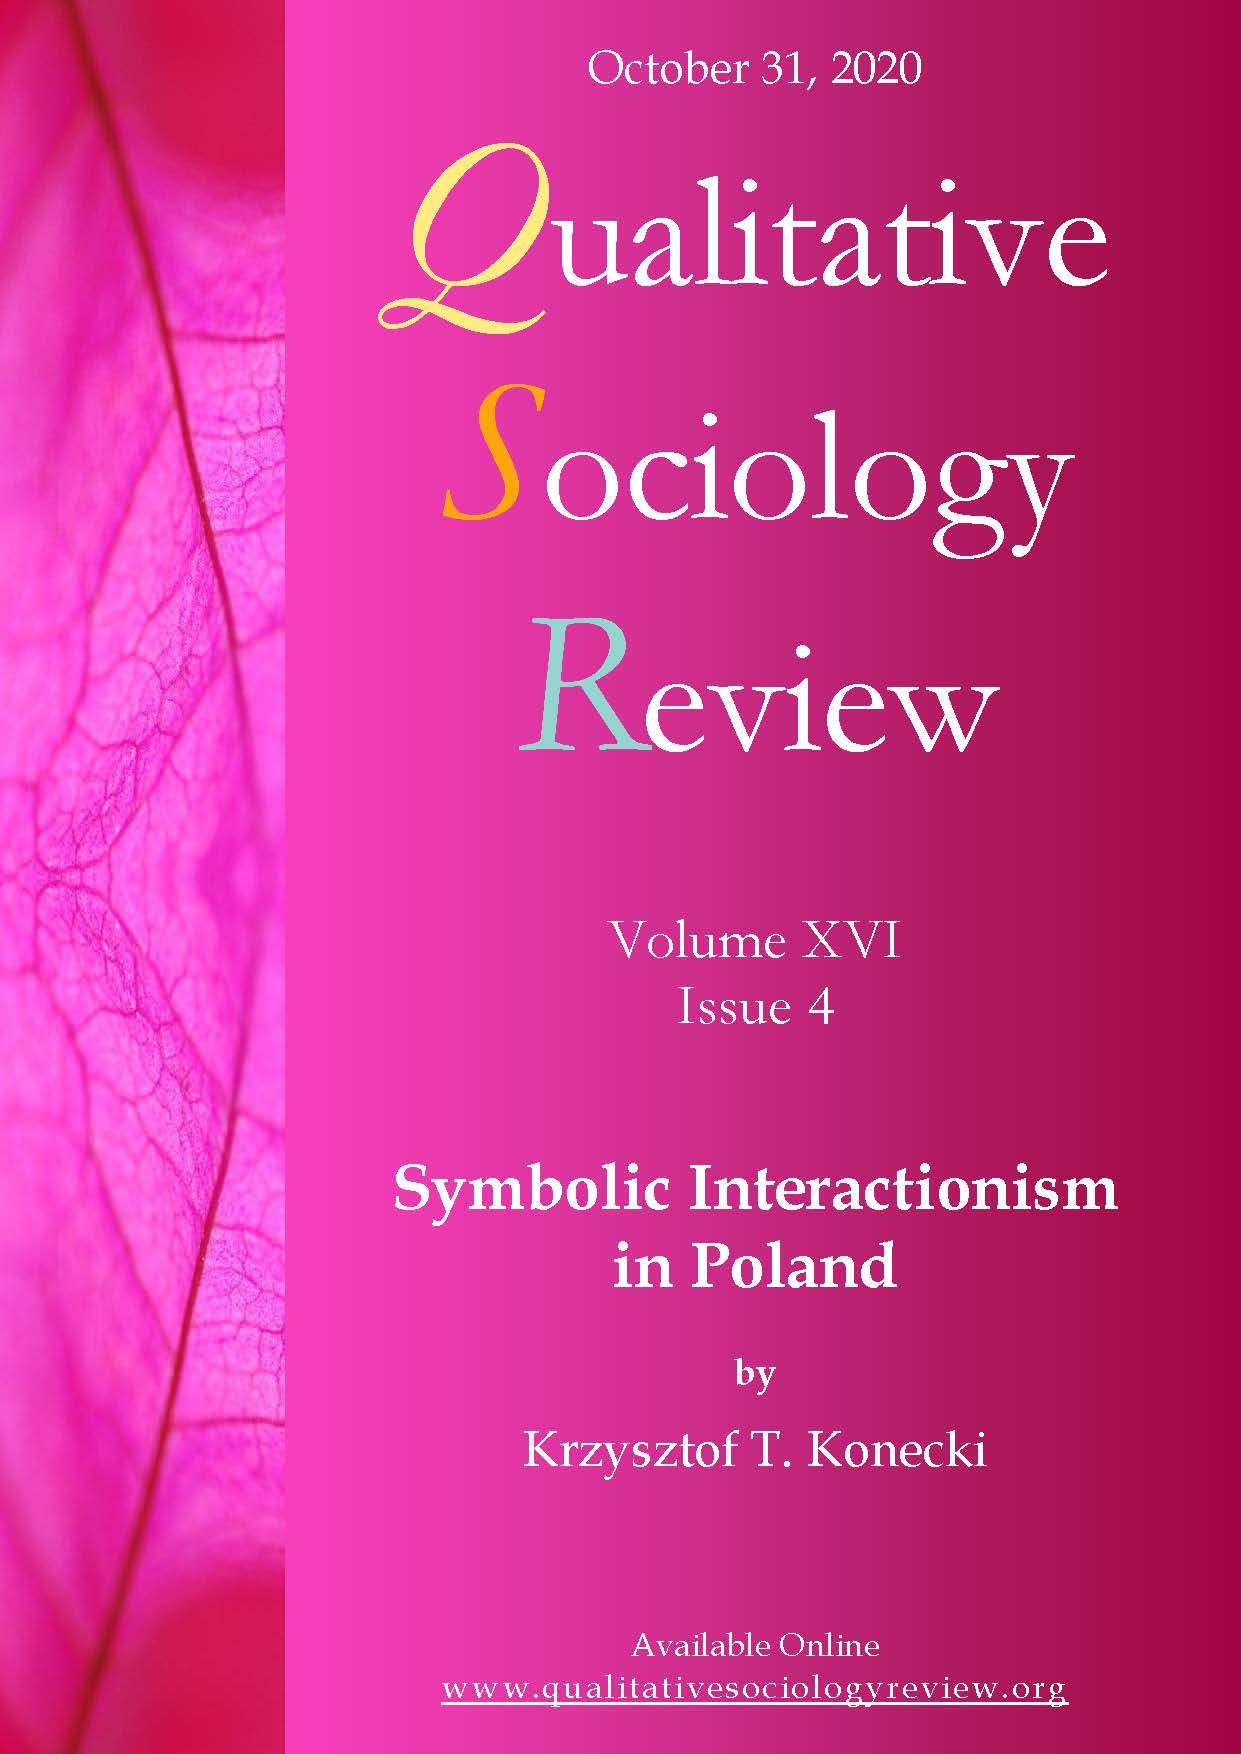 symbolic perspective sociology